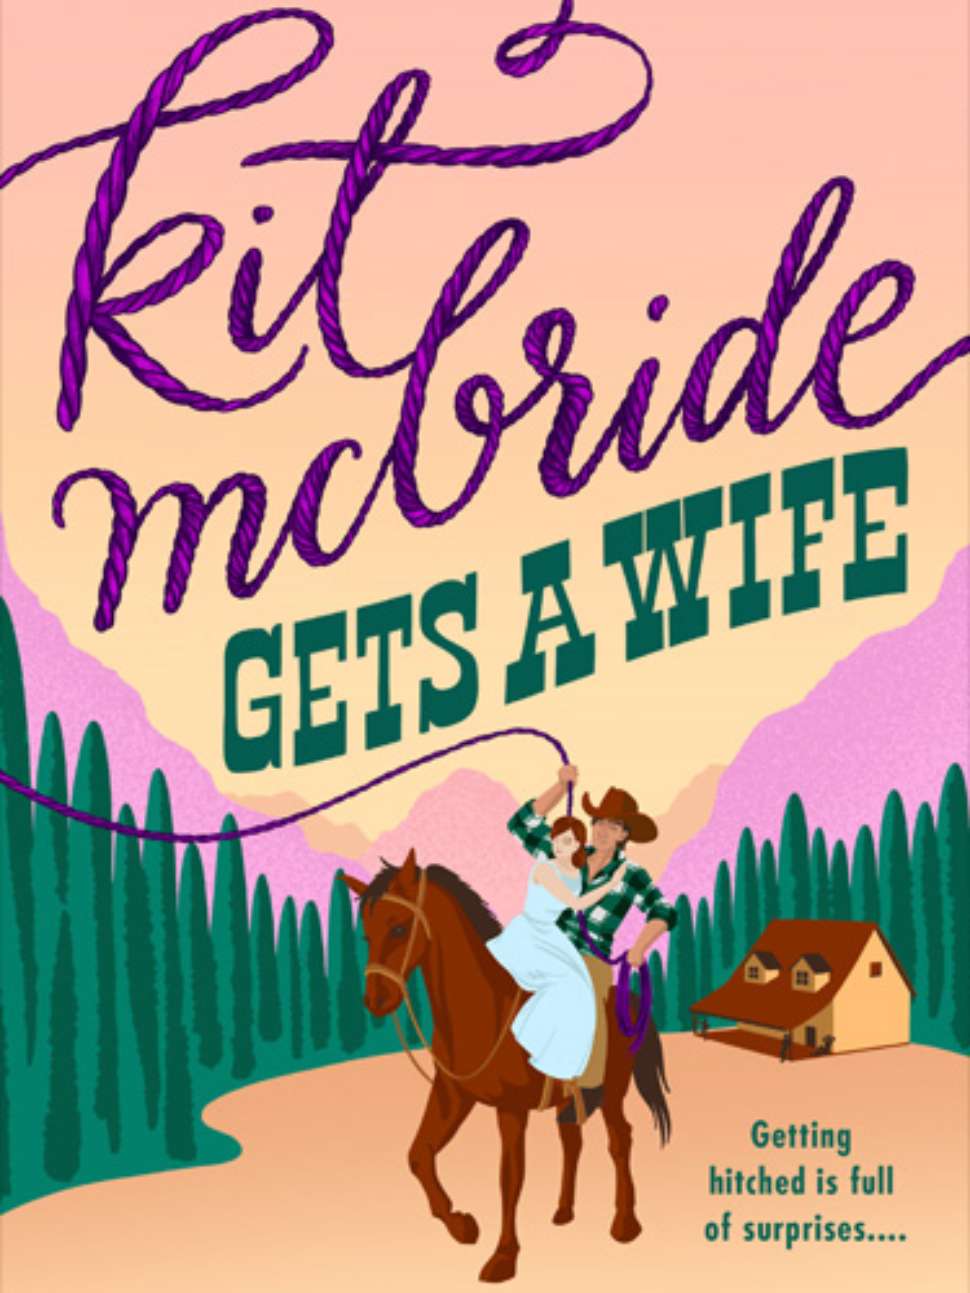 kit-mcbride-gets-a-wife.jpg